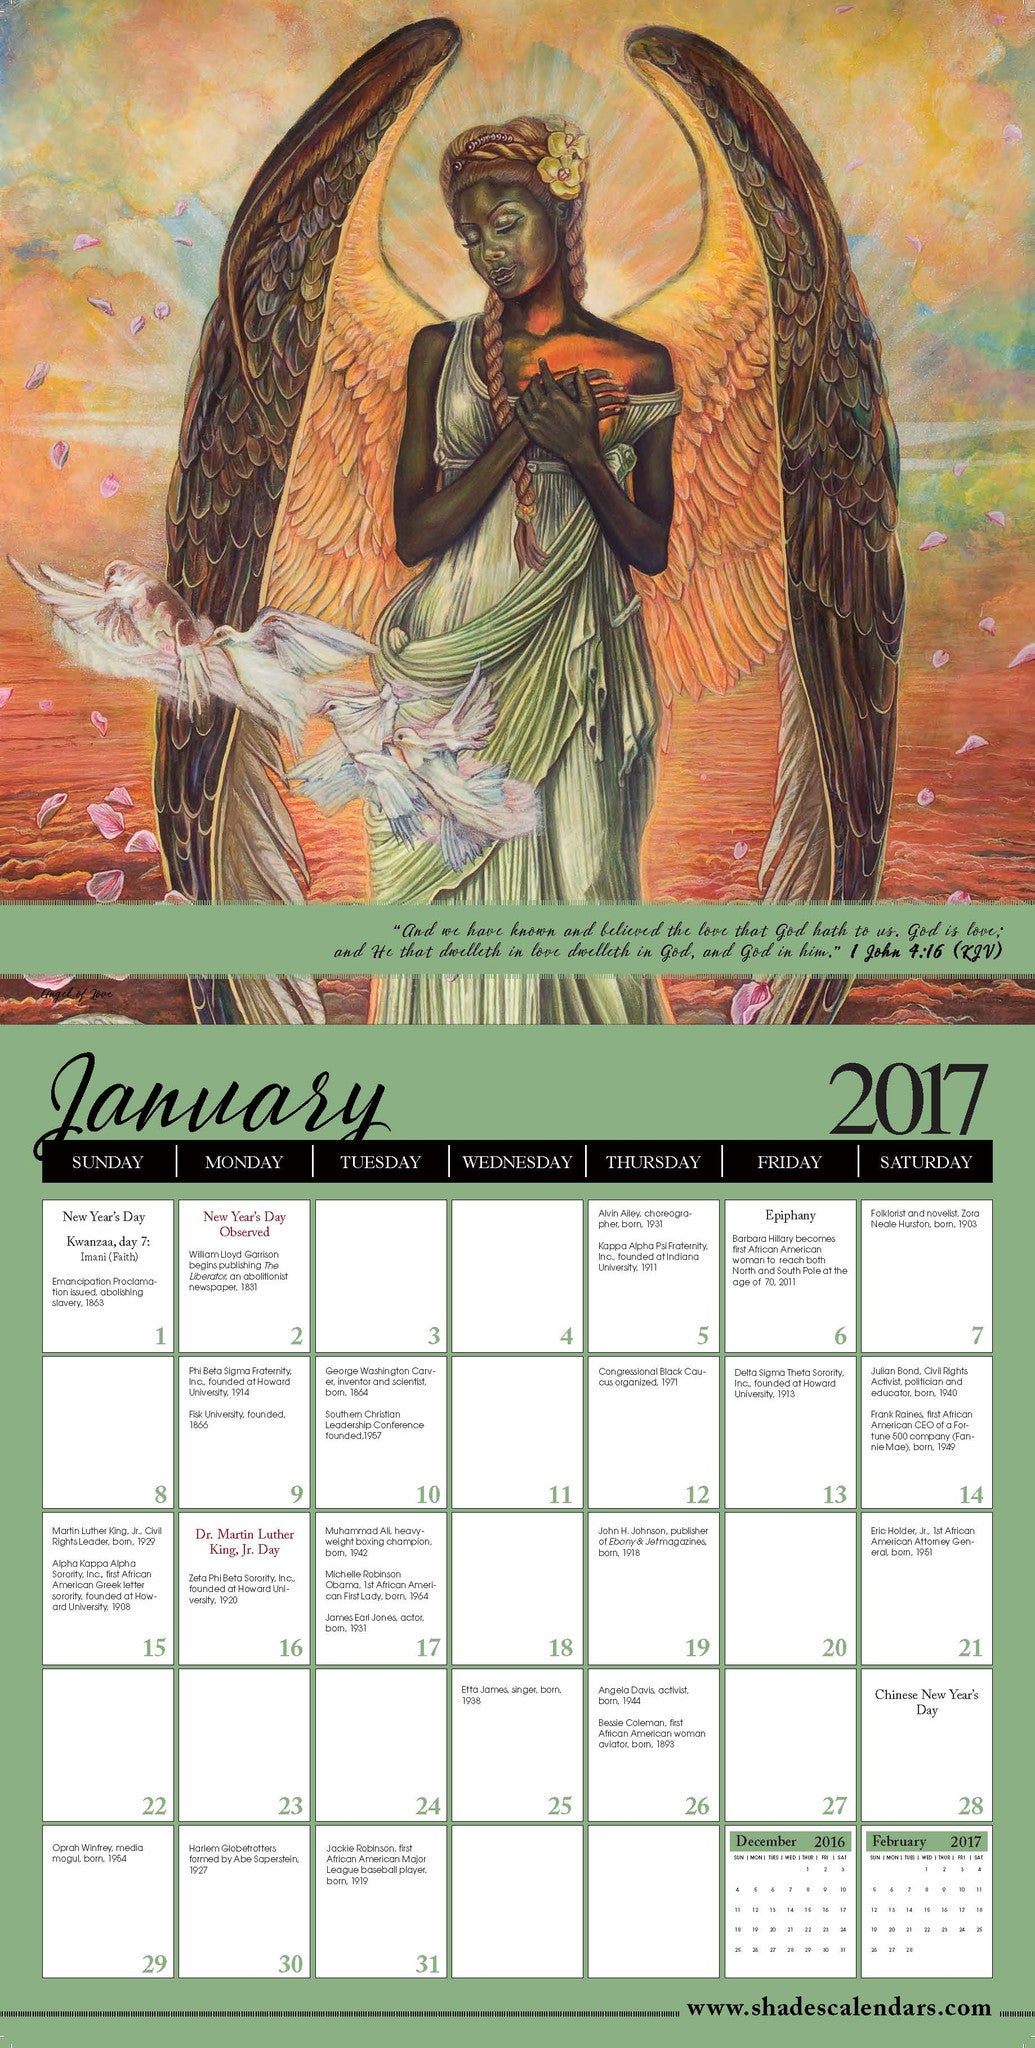 Powered by Praise: 2017 African American Wall Calendar (Interior)